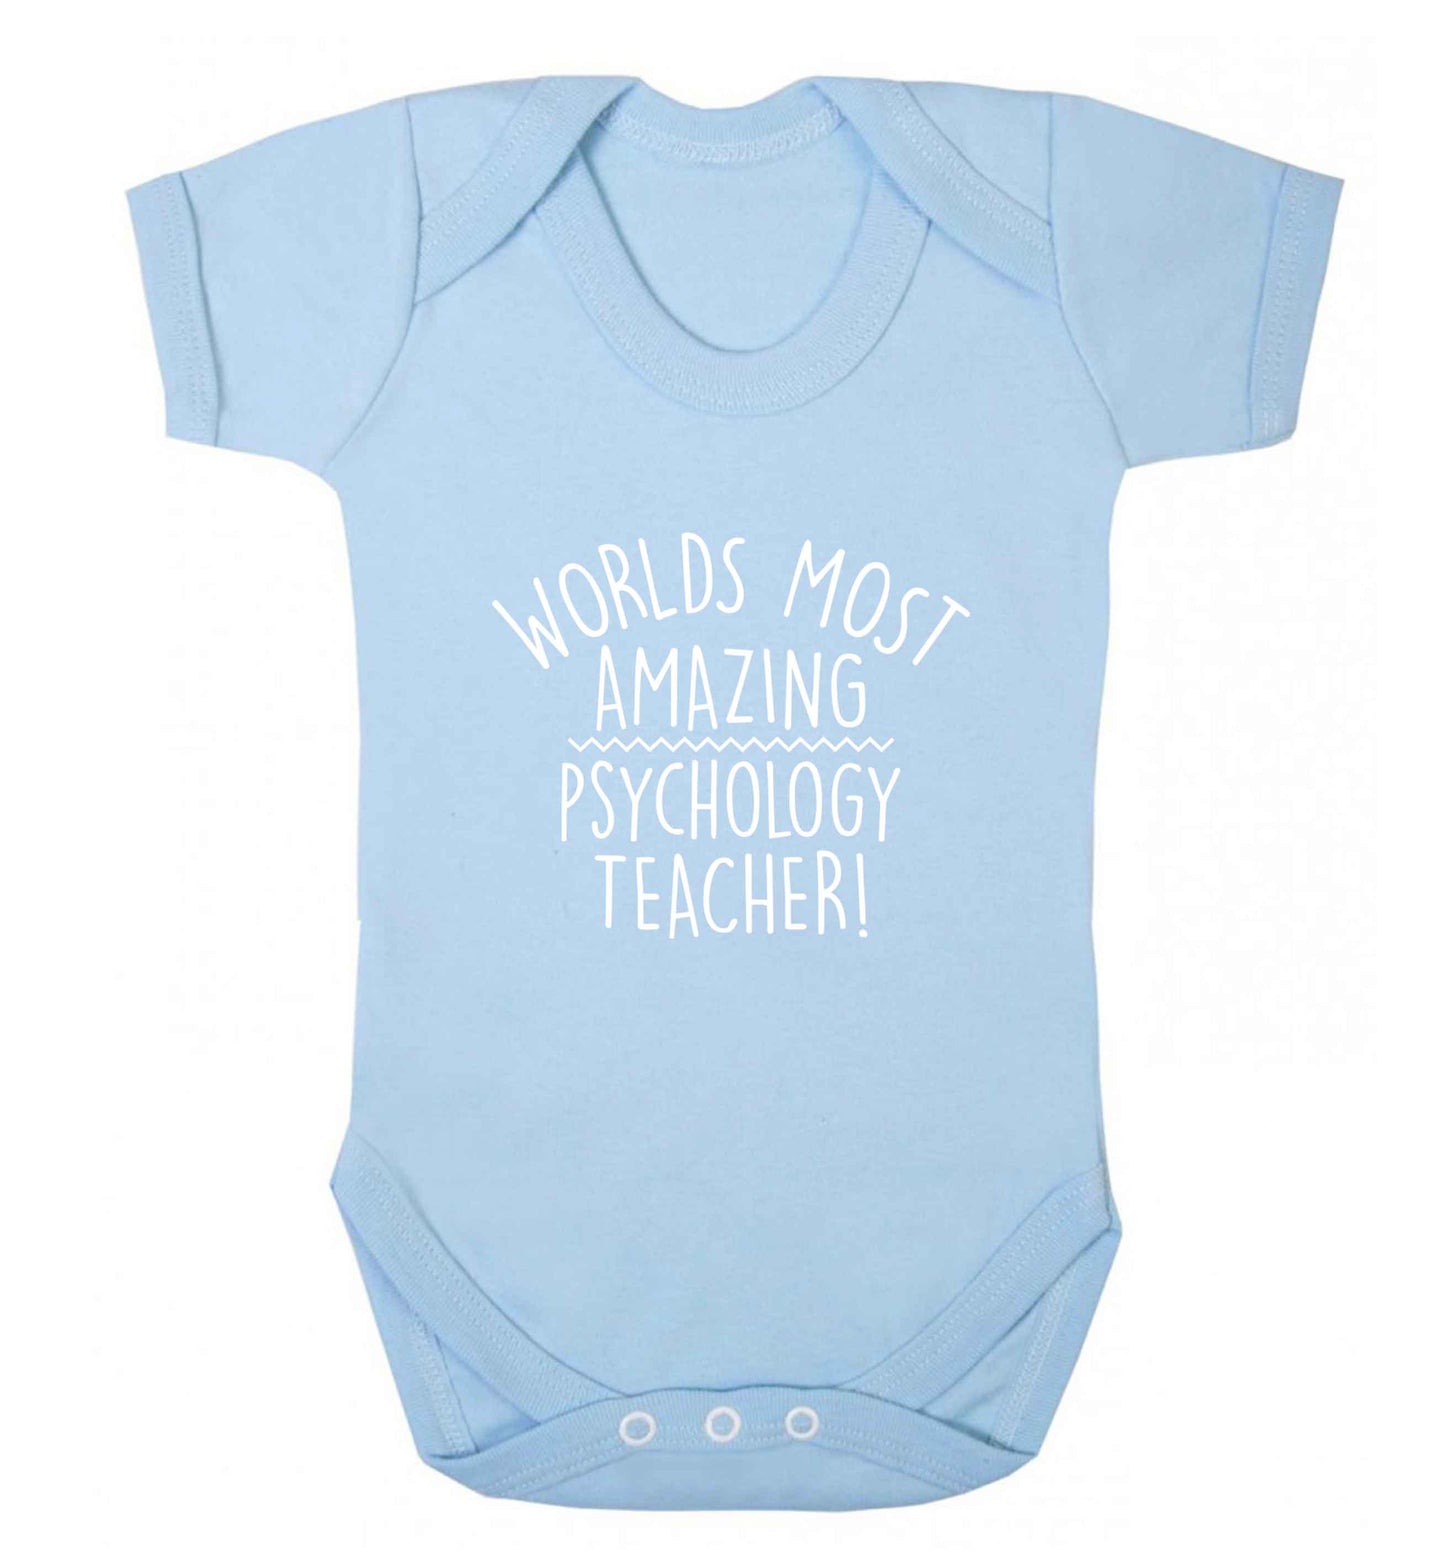 Worlds most amazing psychology teacher baby vest pale blue 18-24 months